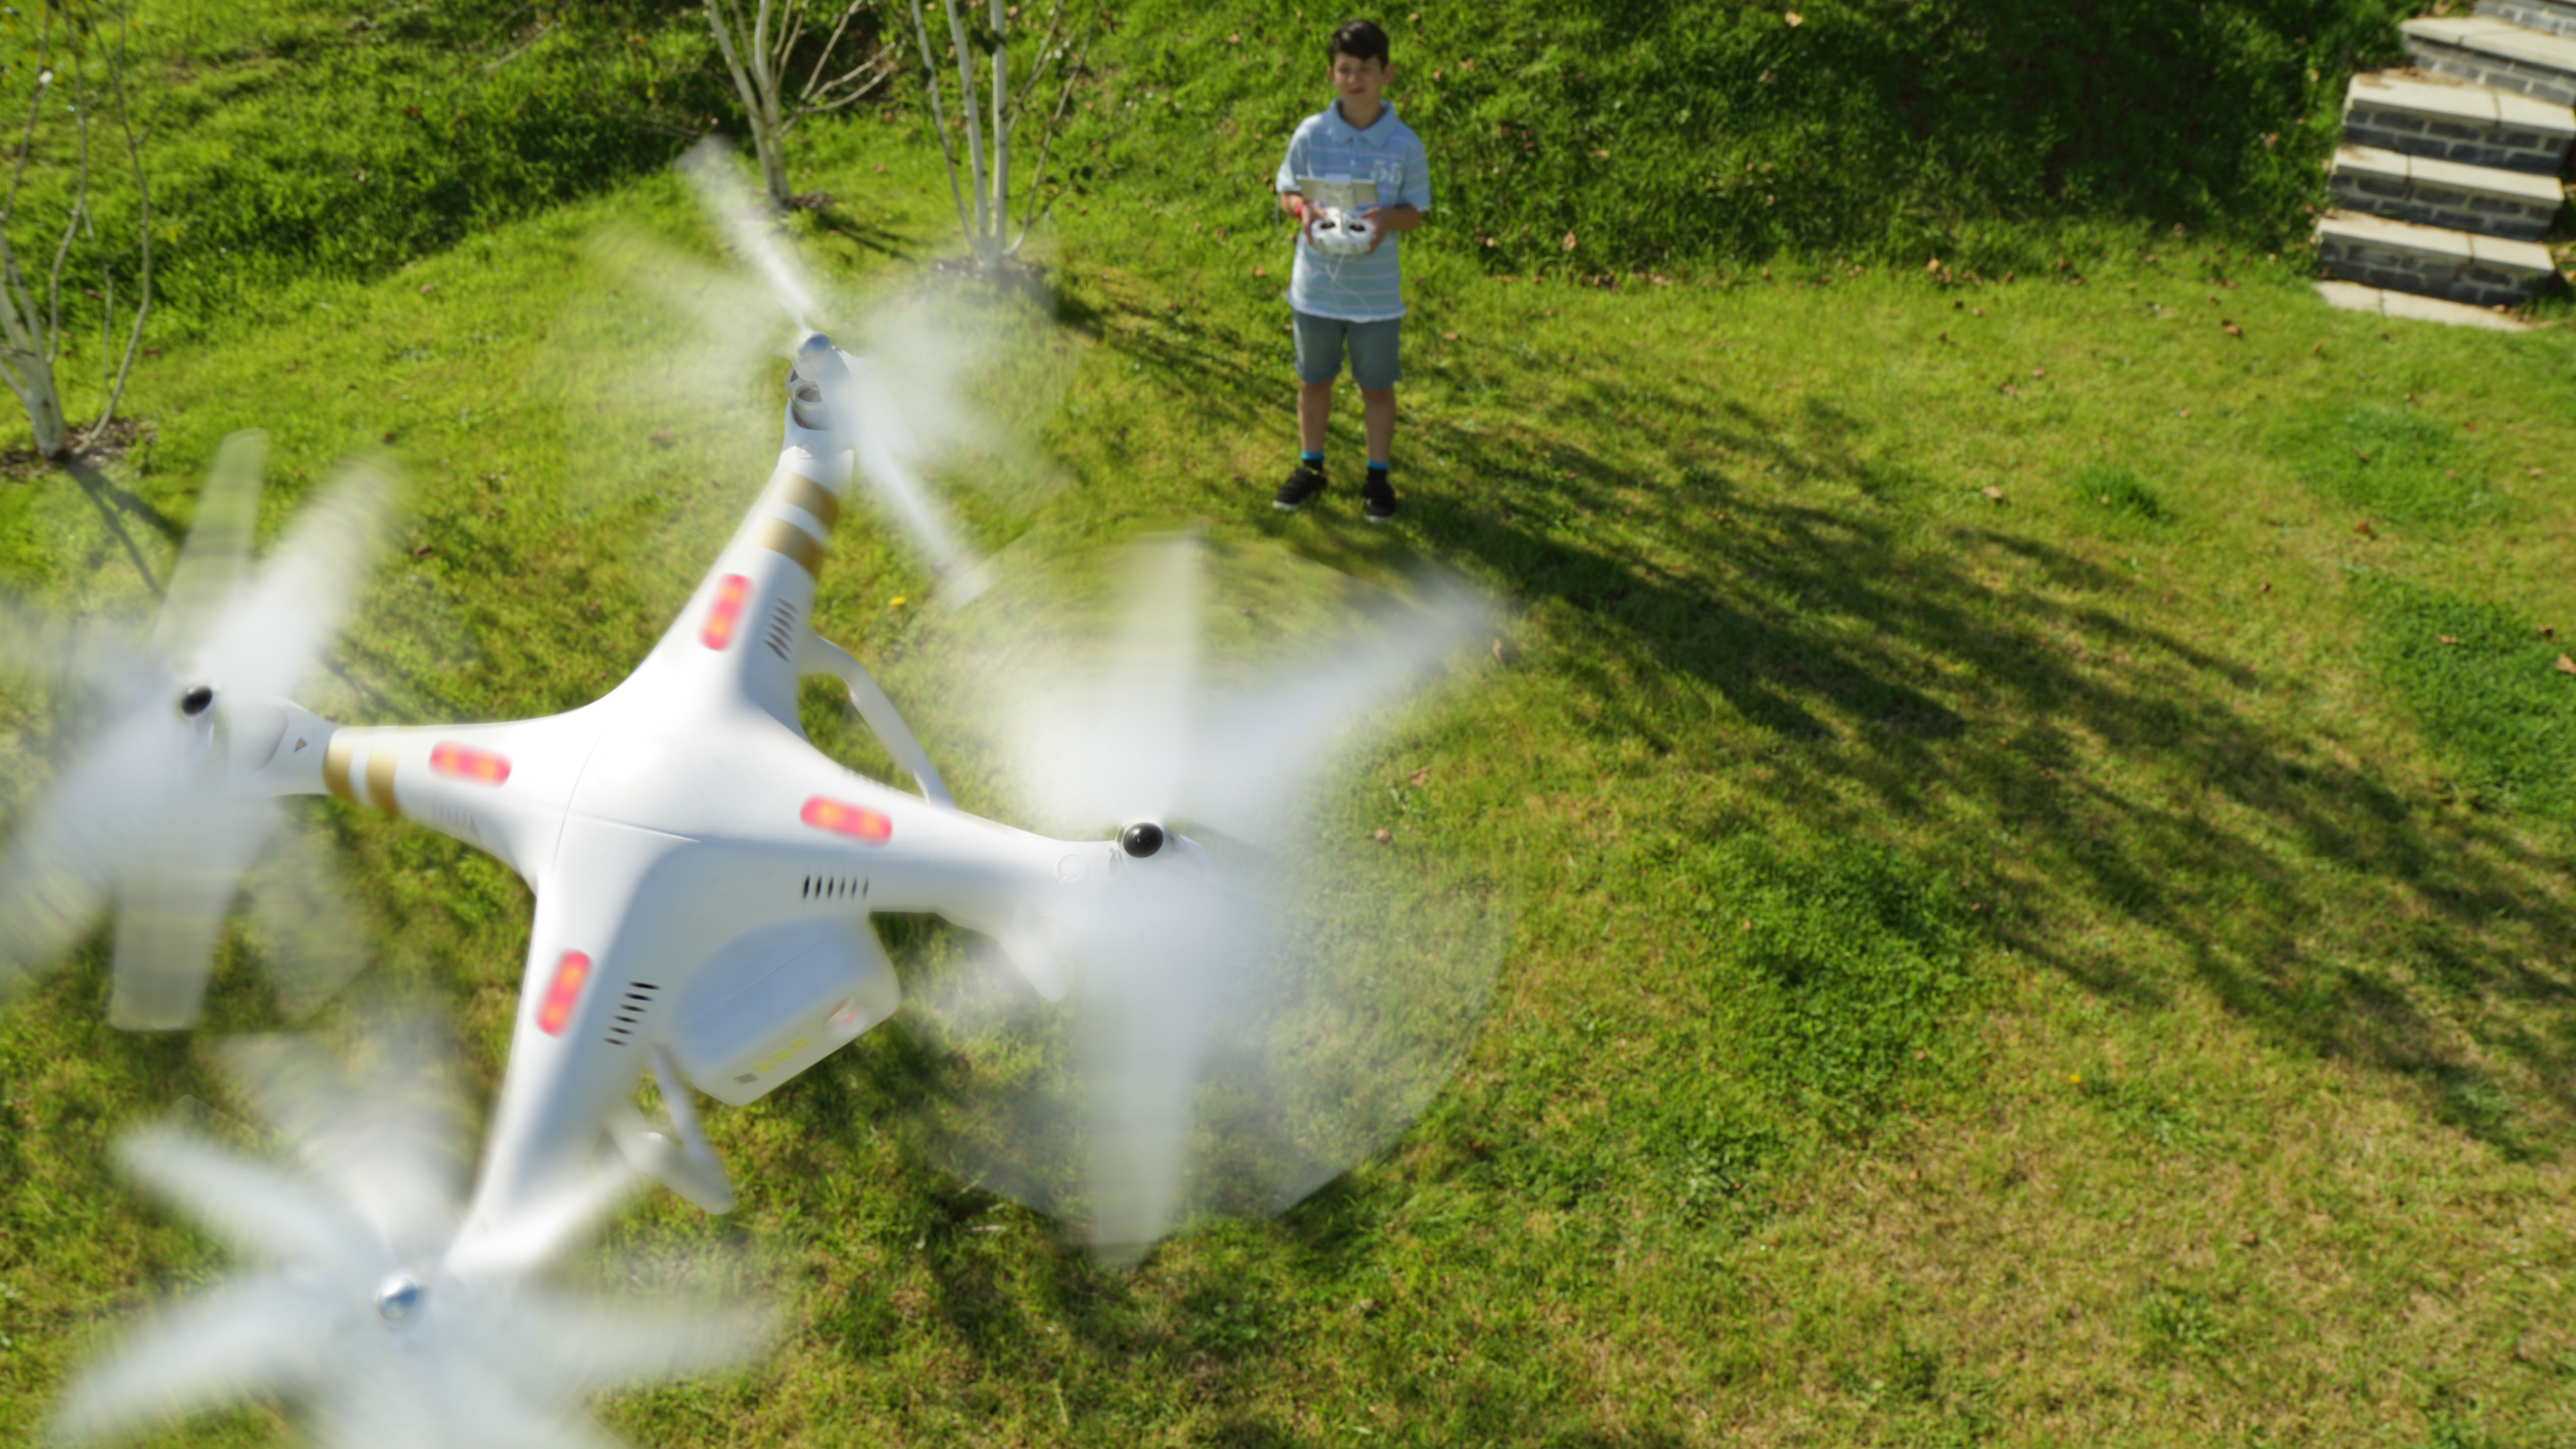 Boy flying a drone in the backyard